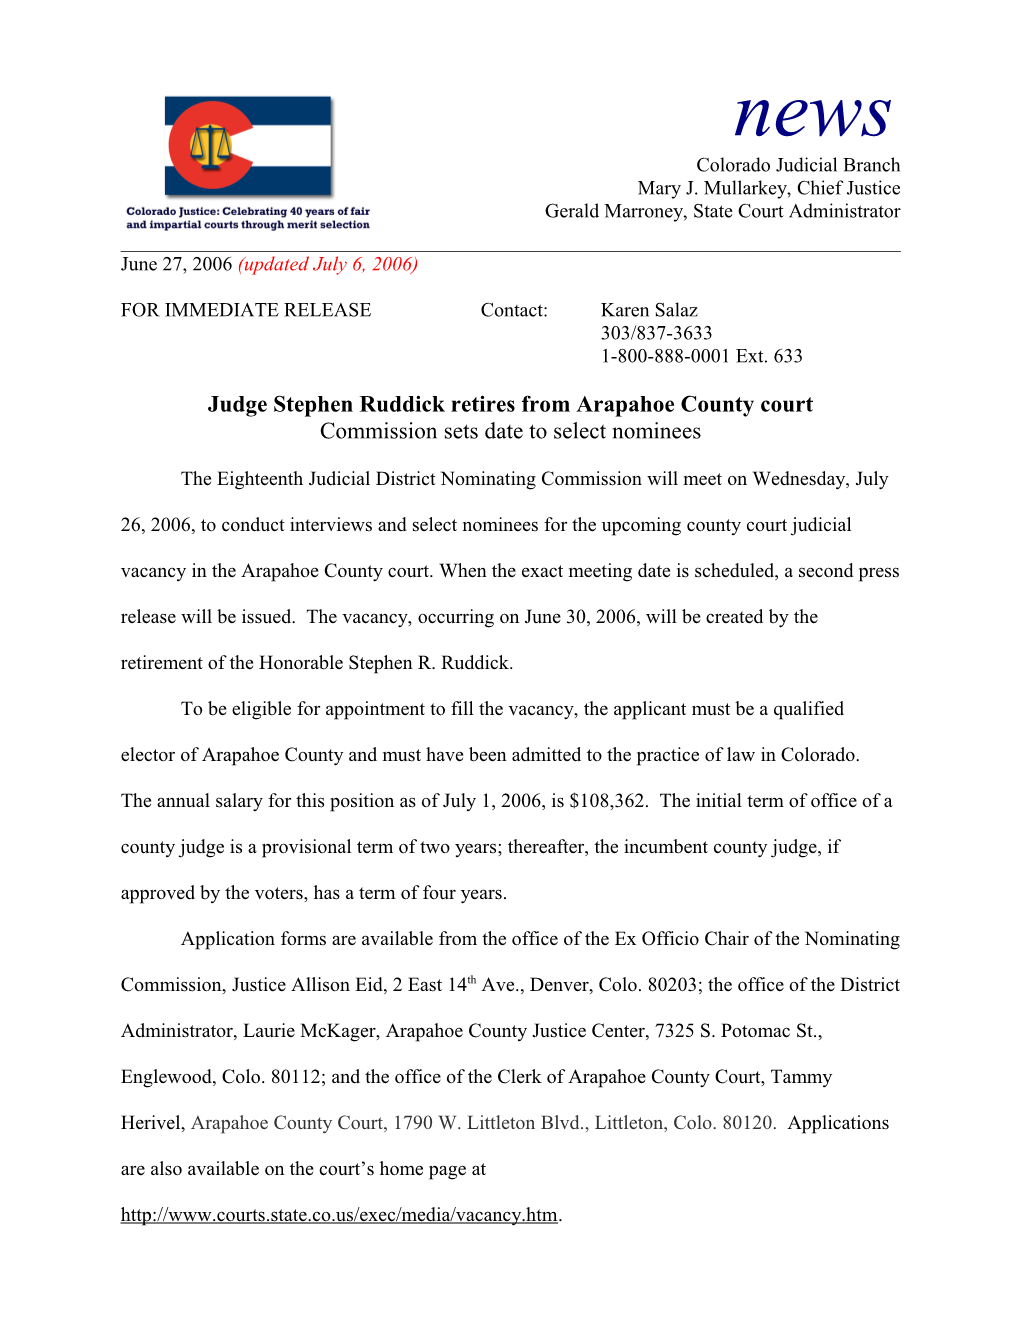 Judge Stephen Ruddick Retires from Arapahoe County Court